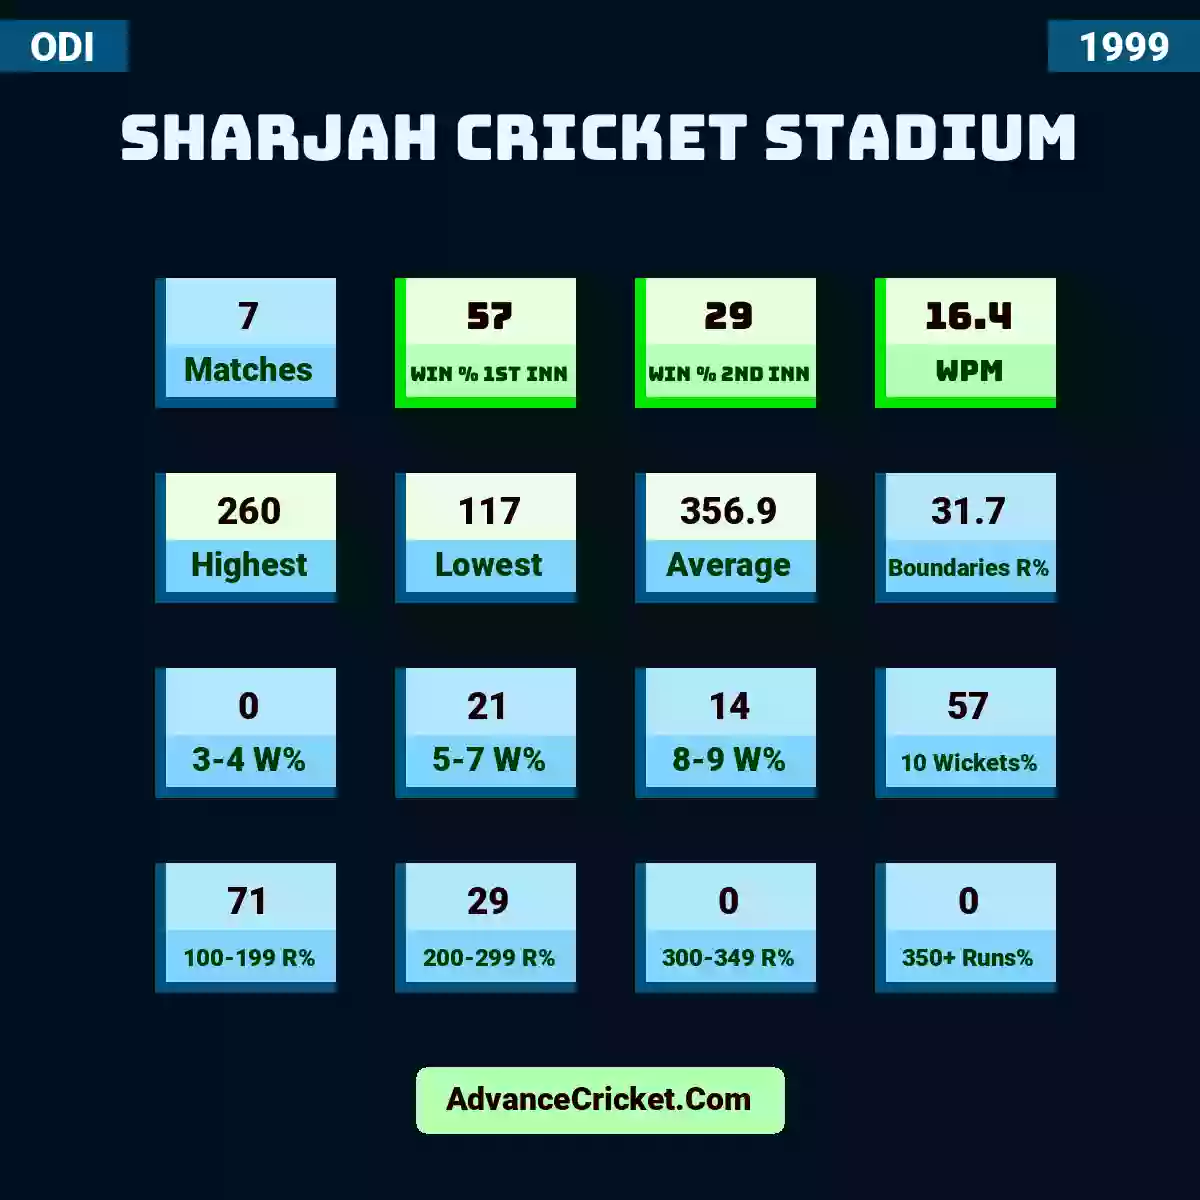 Image showing Sharjah Cricket Stadium with Matches: 7, Win % 1st Inn: 57, Win % 2nd Inn: 29, WPM: 16.4, Highest: 260, Lowest: 117, Average: 356.9, Boundaries R%: 31.7, 3-4 W%: 0, 5-7 W%: 21, 8-9 W%: 14, 10 Wickets%: 57, 100-199 R%: 71, 200-299 R%: 29, 300-349 R%: 0, 350+ Runs%: 0.